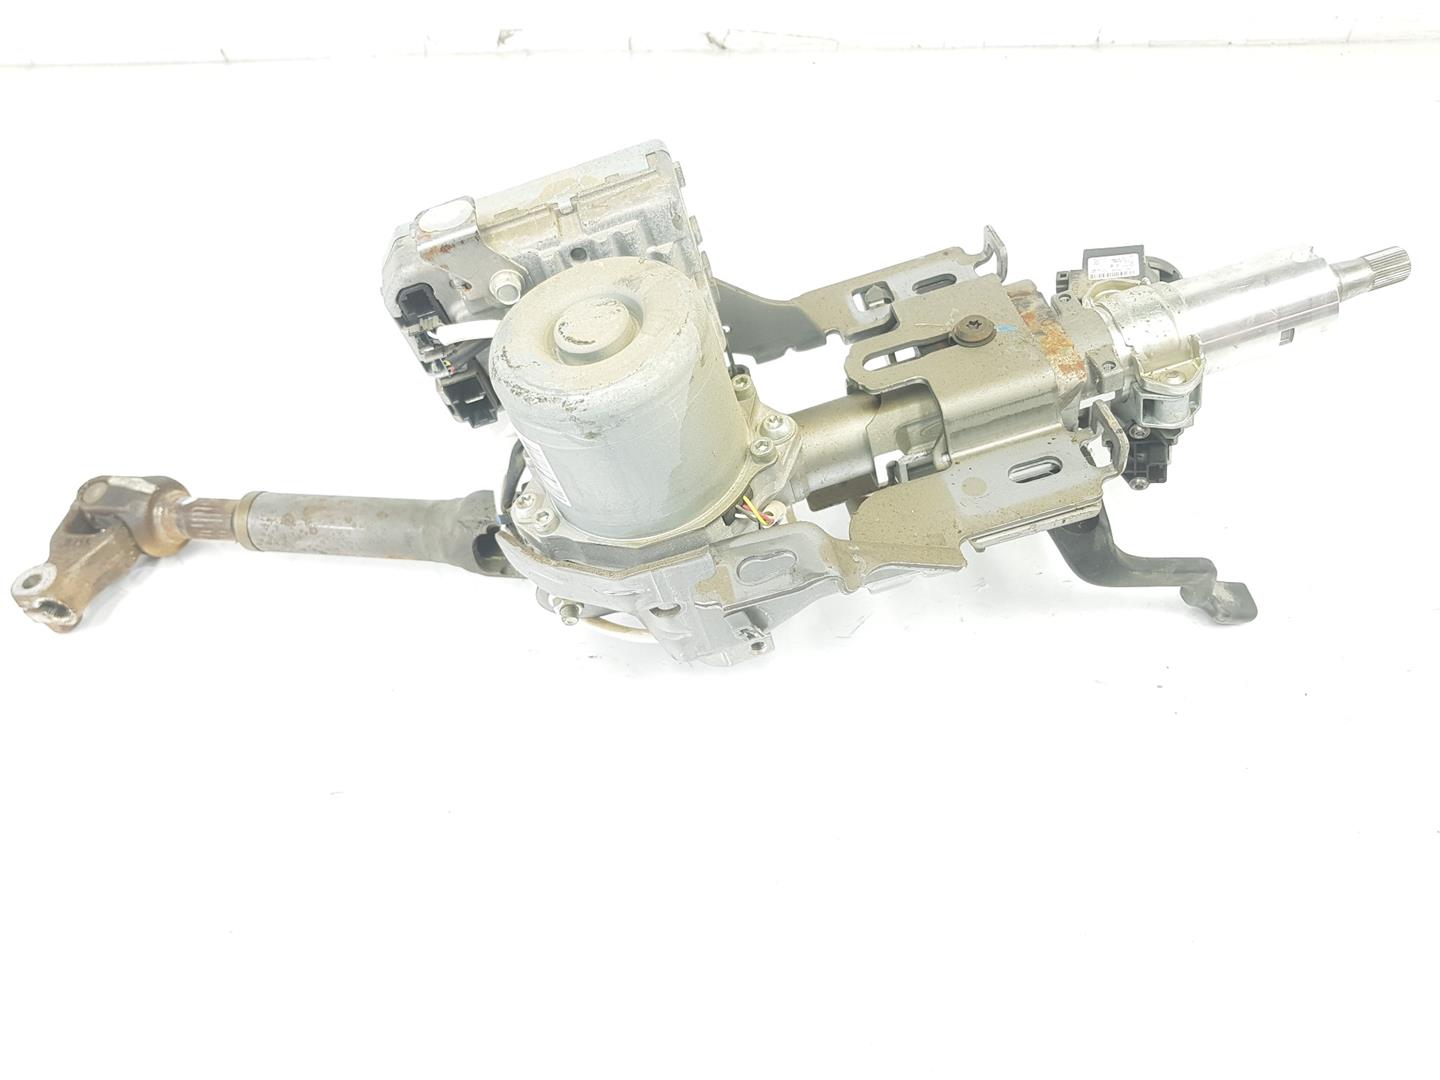 NISSAN Qashqai 2 generation (2013-2023) Steering Column Mechanism 48810HV90B, 48811HV06A 19886721